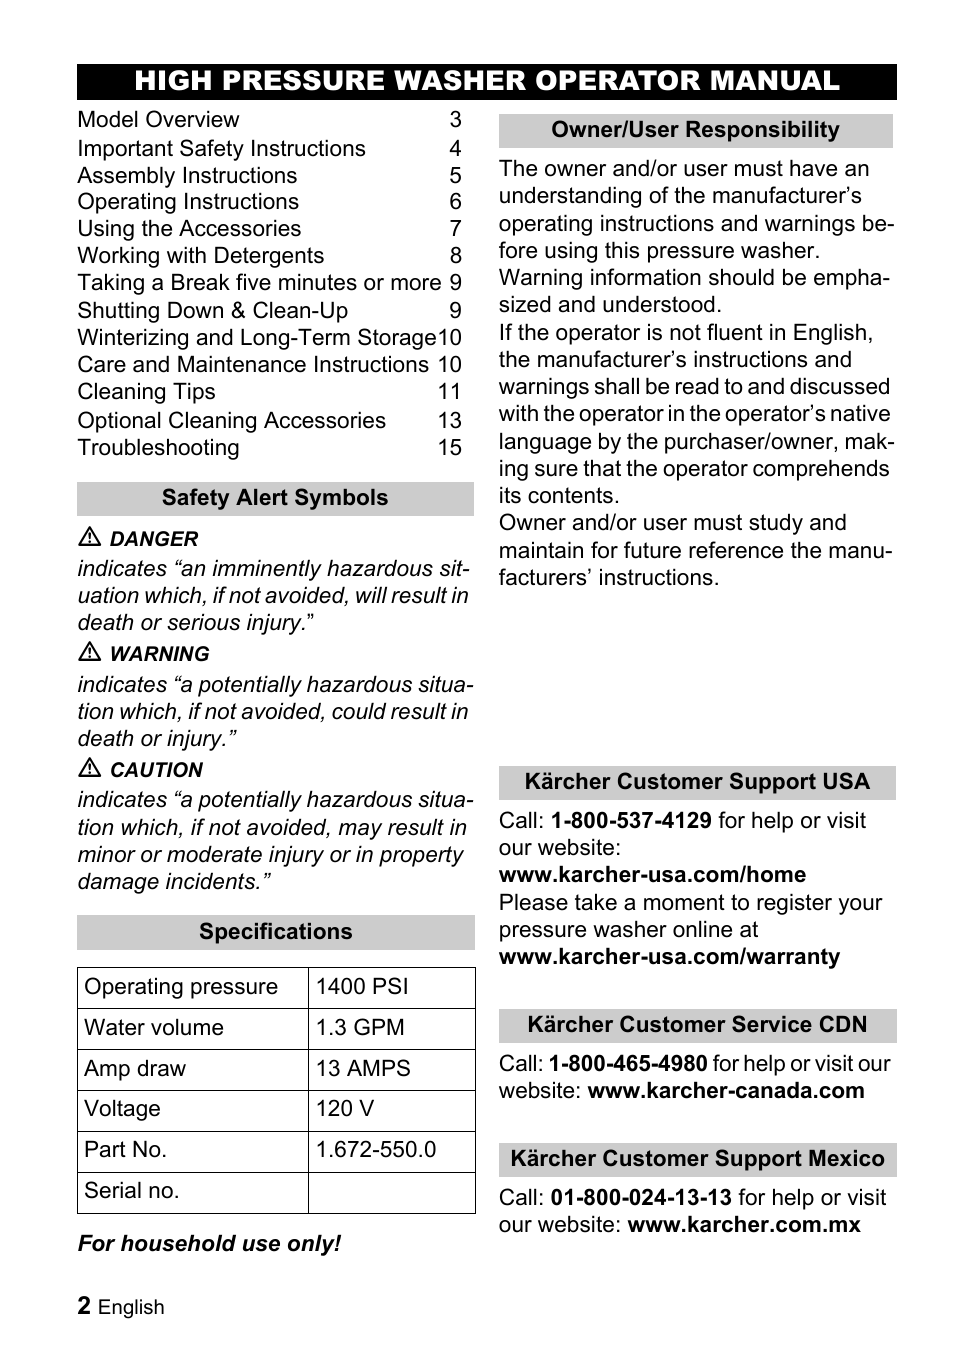 High pressure washer operator manual | Karcher K 2.16 User Manual | Page 2  / 48 | Original mode